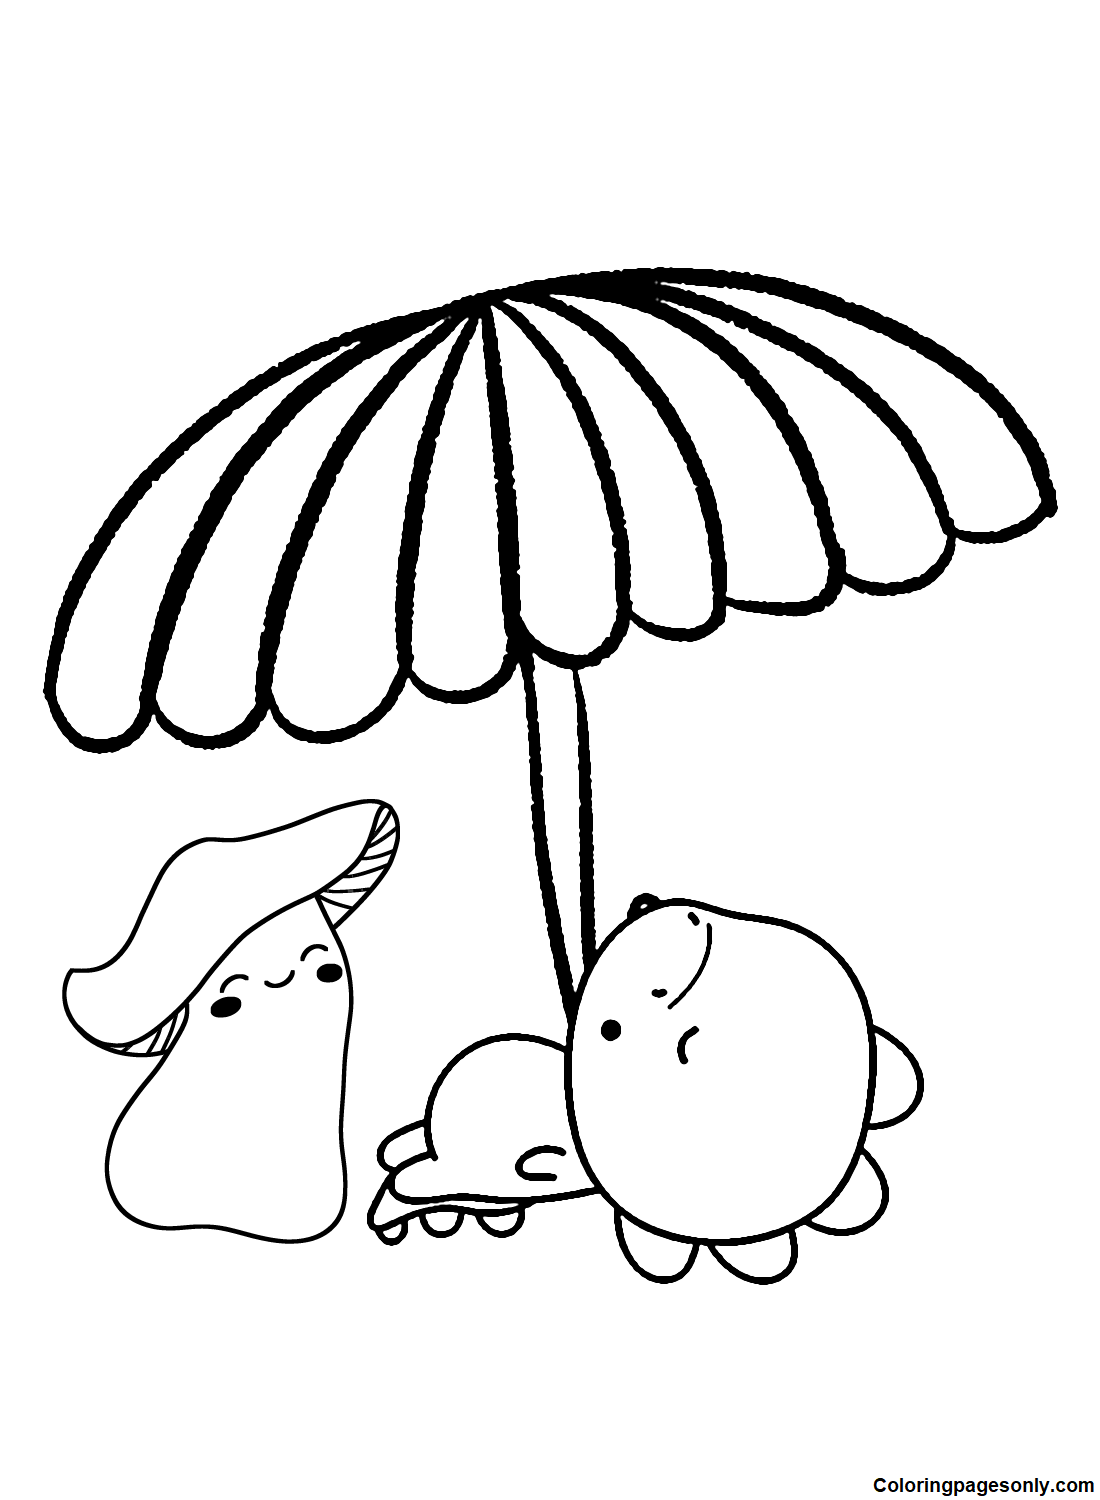 Fotos Guarda-chuva da Umbrella